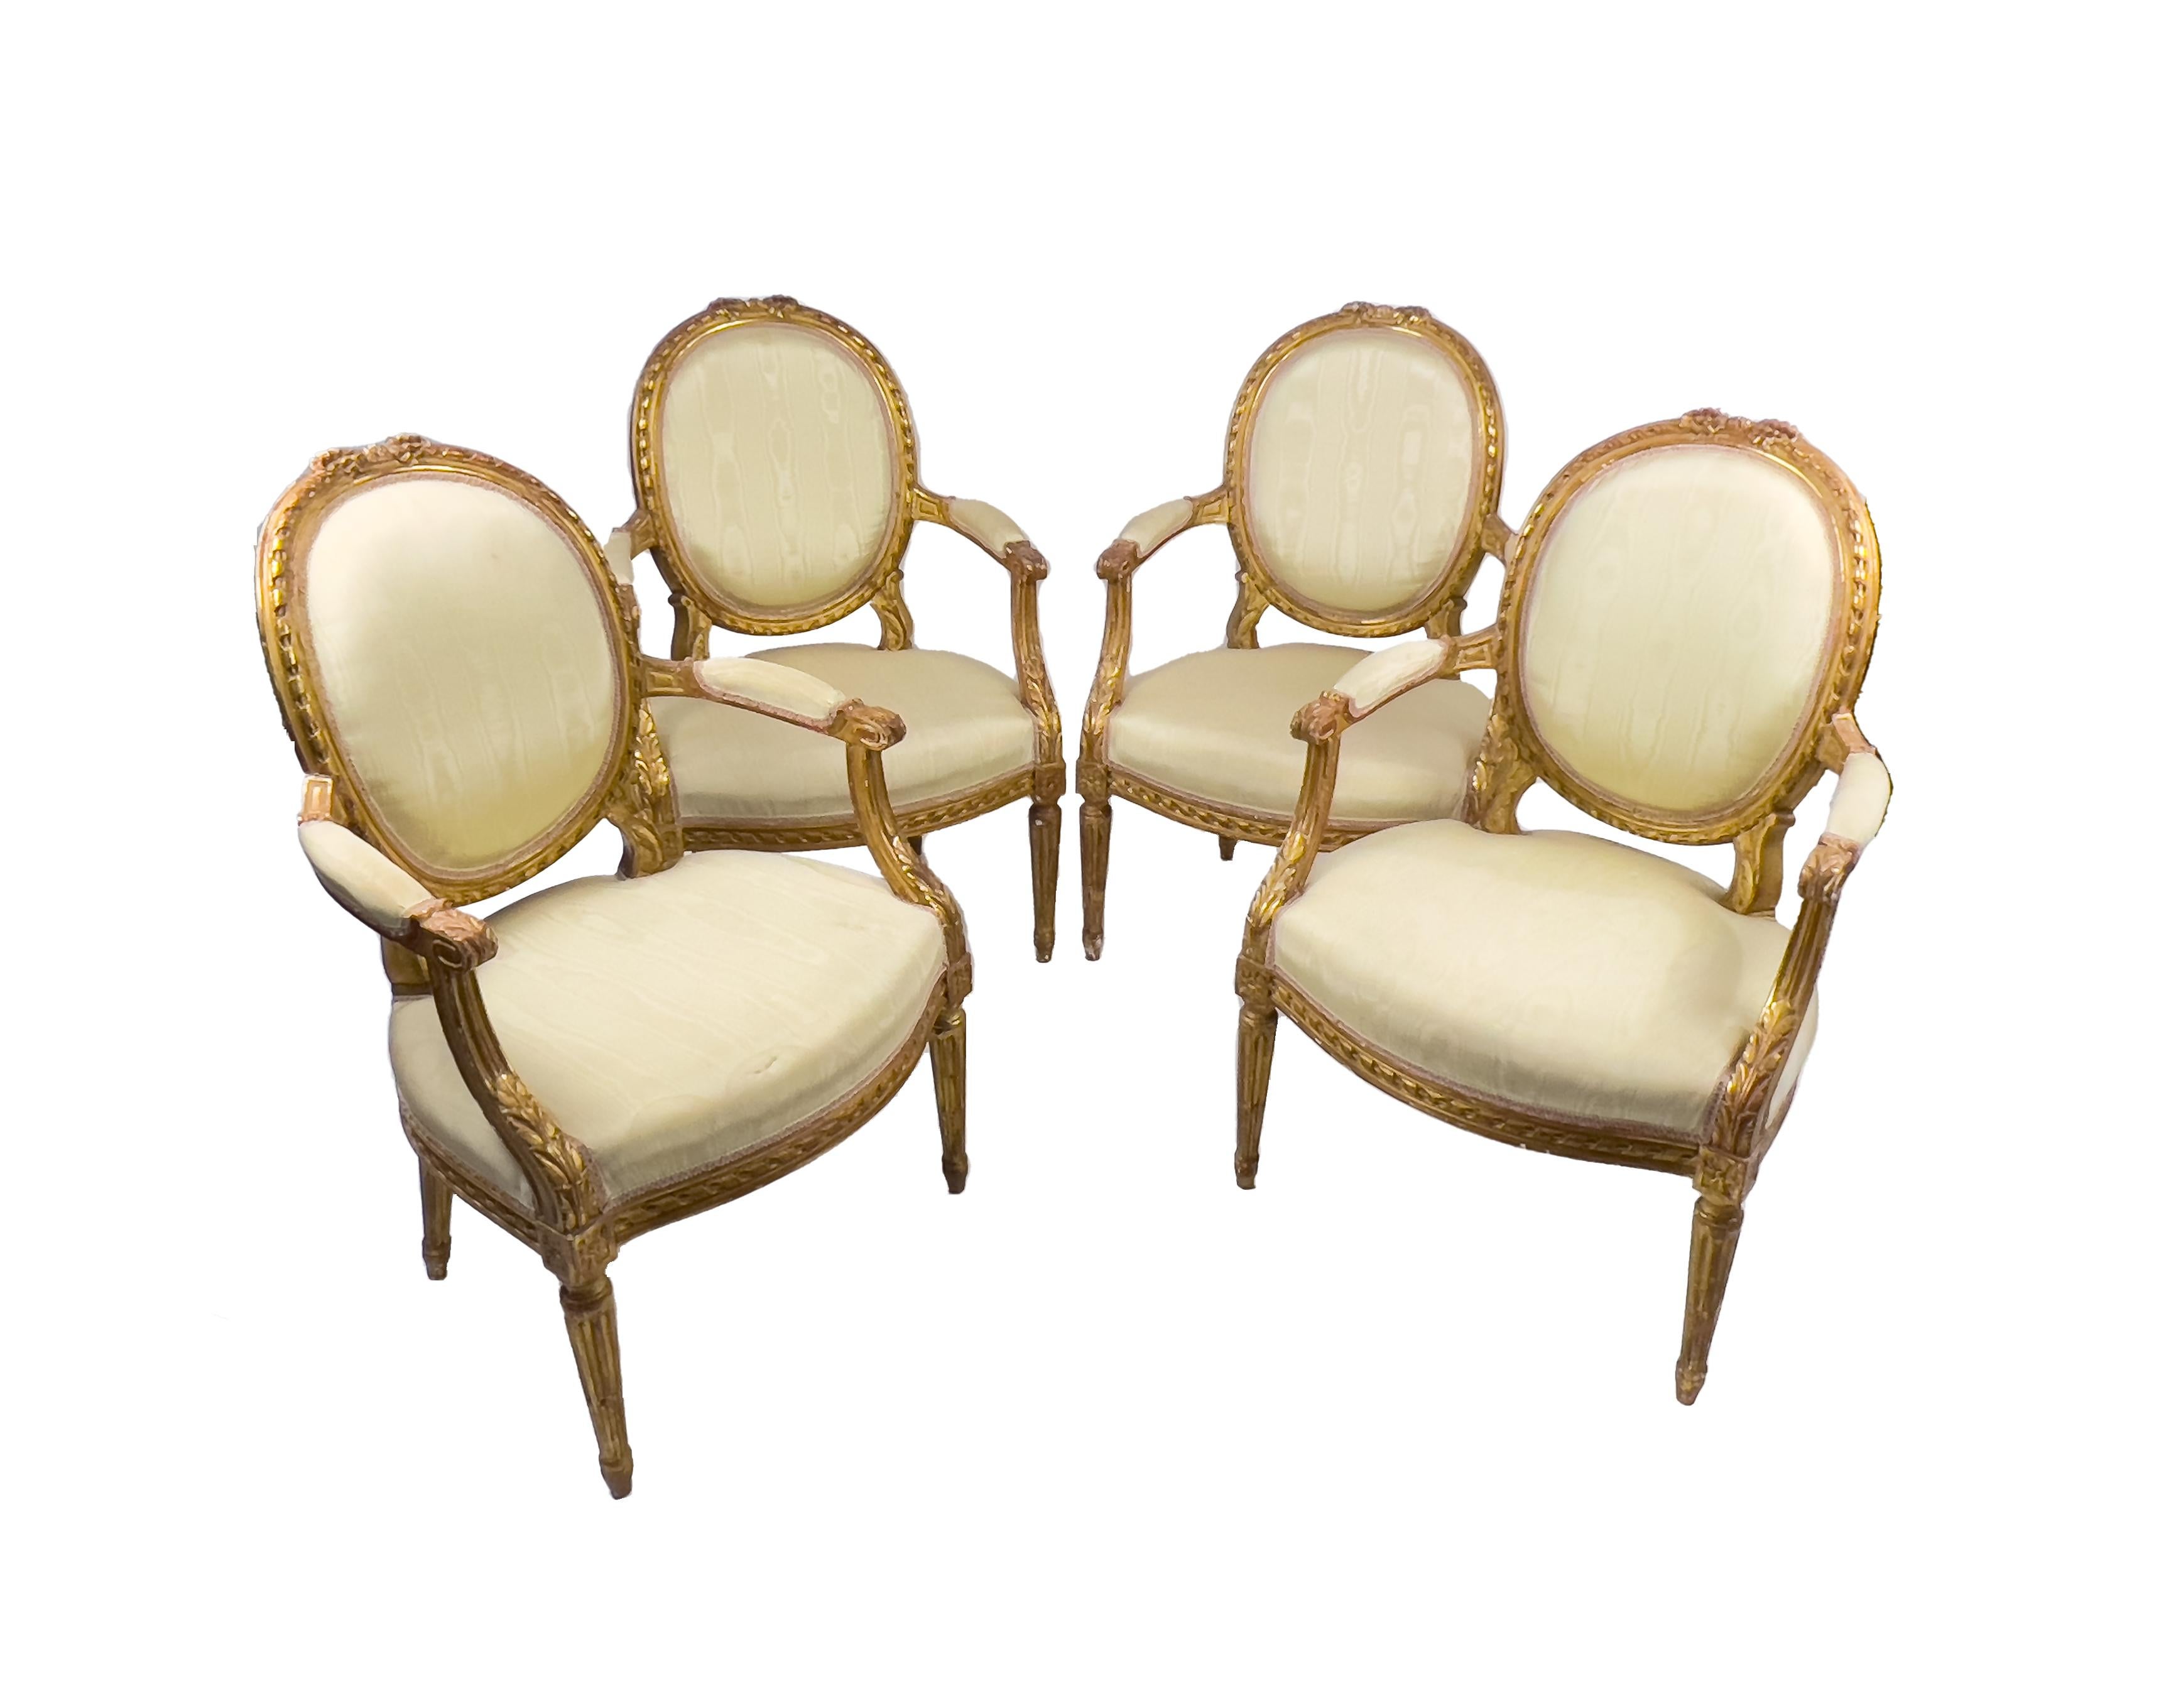 19th Century French Louis XVI Style Gilt-Wood Five-Piece Salon Suite For Sale 2